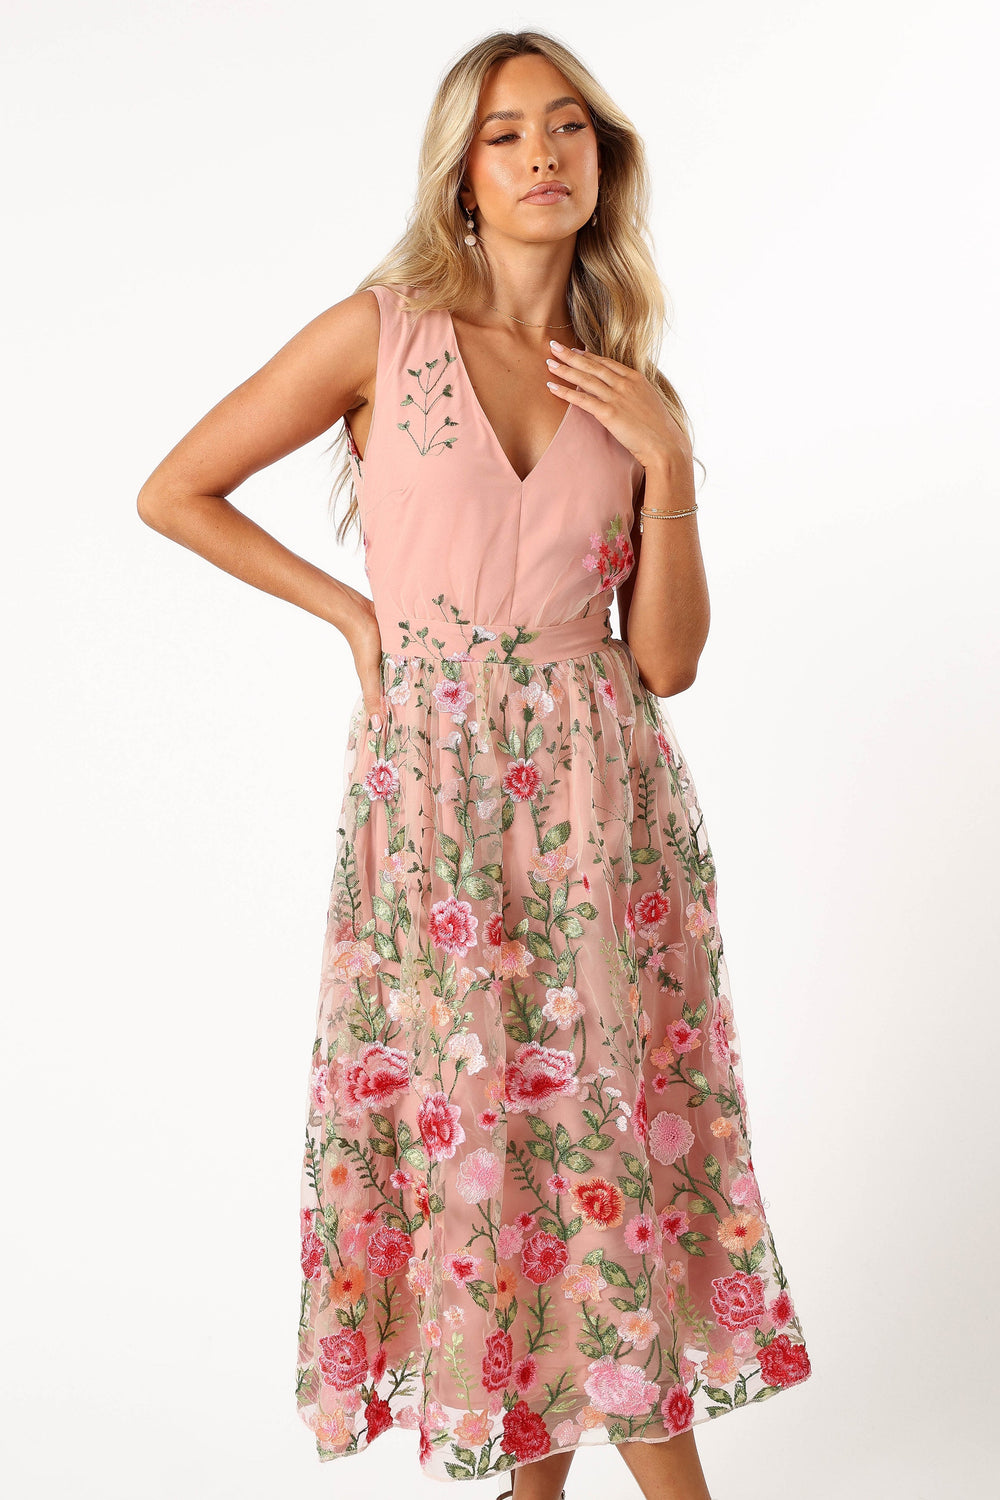 DRESSES @Wonderland Midi Dress - Pink Floral (Hold for Modern Romance)